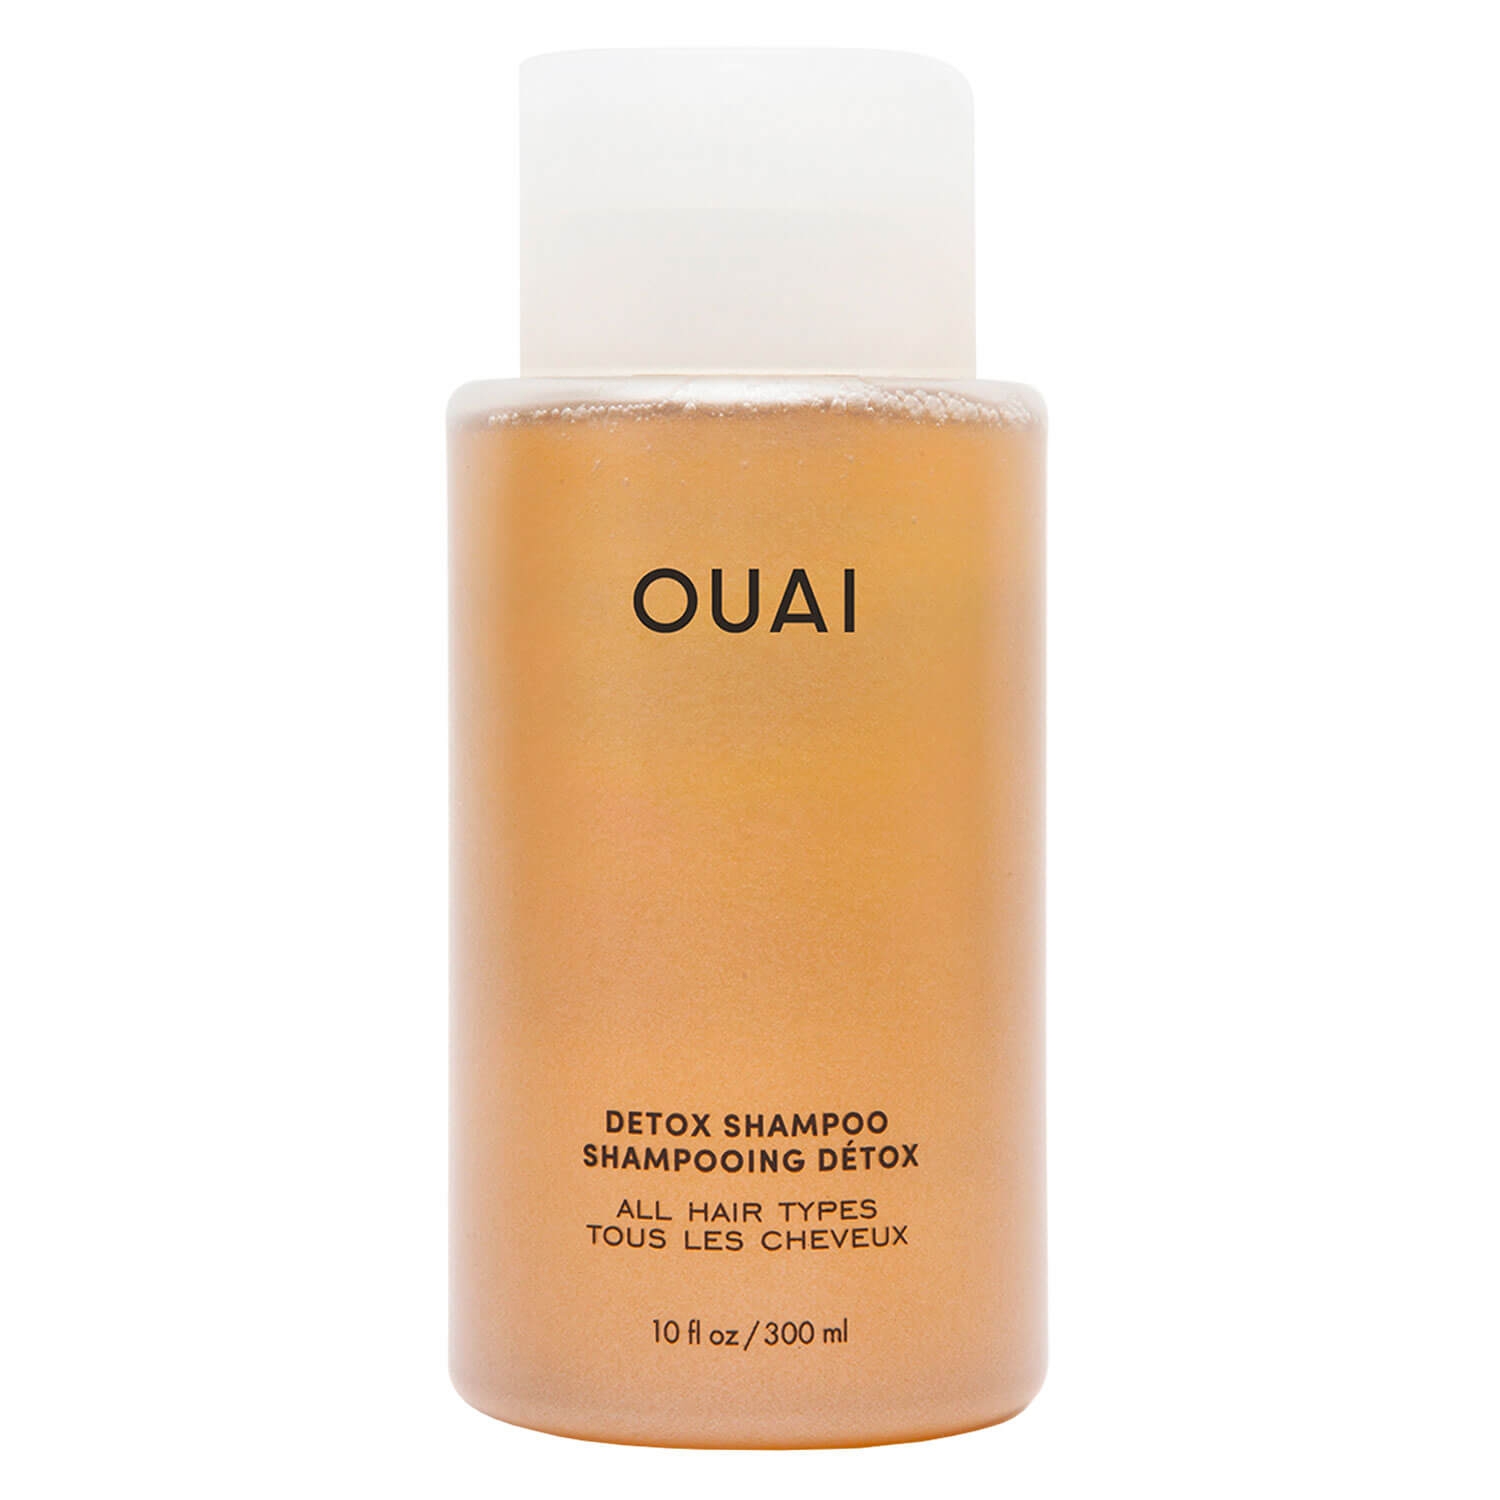 Produktbild von OUAI - Detox Shampoo